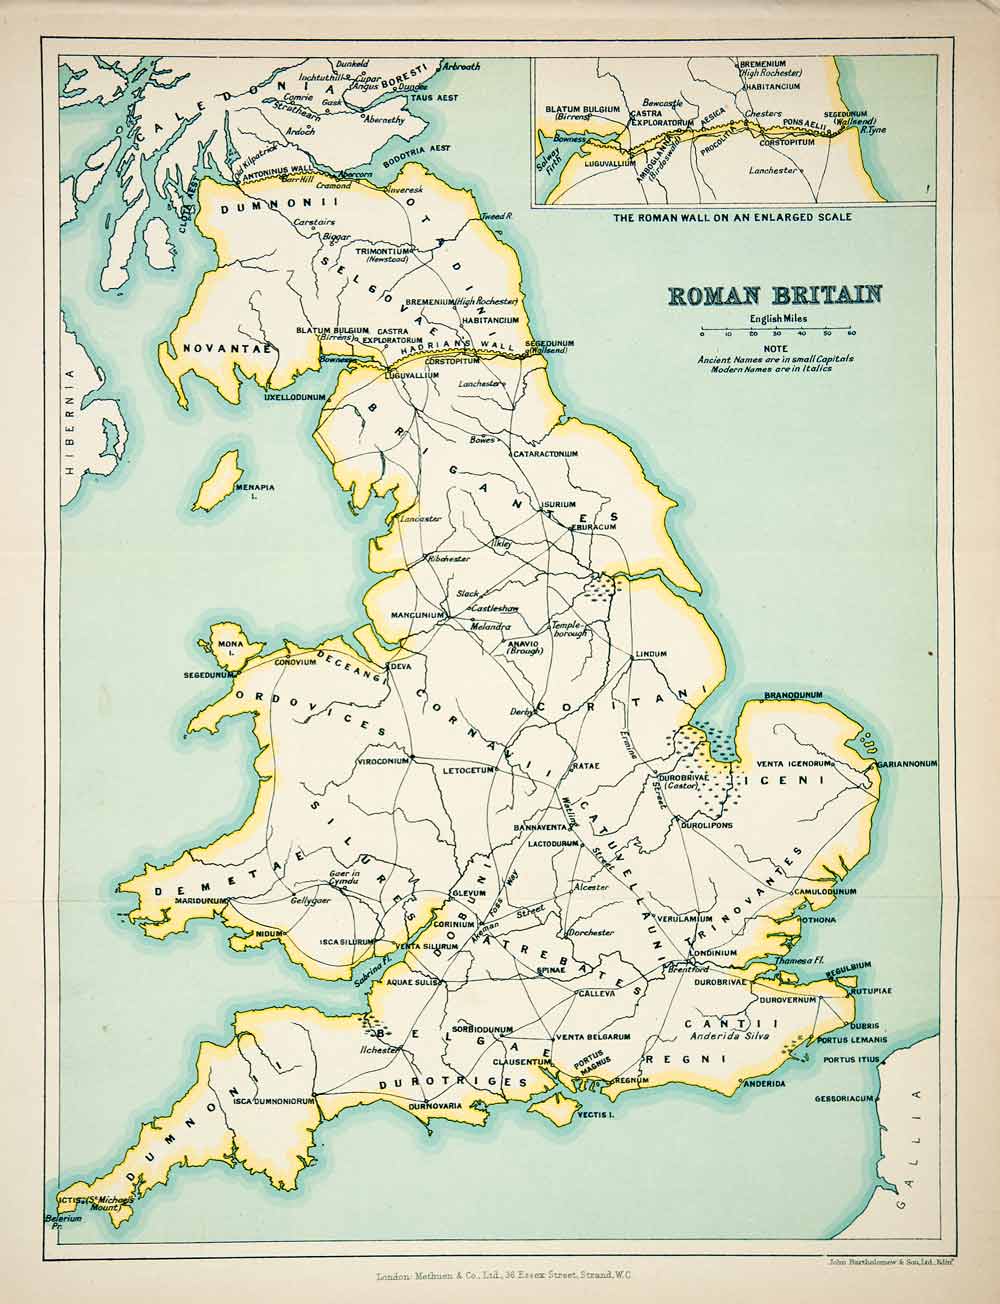 1923 Lithograph Map Roman Britain Demetae Dumnonii Durotriges Regni Lindum XEC4